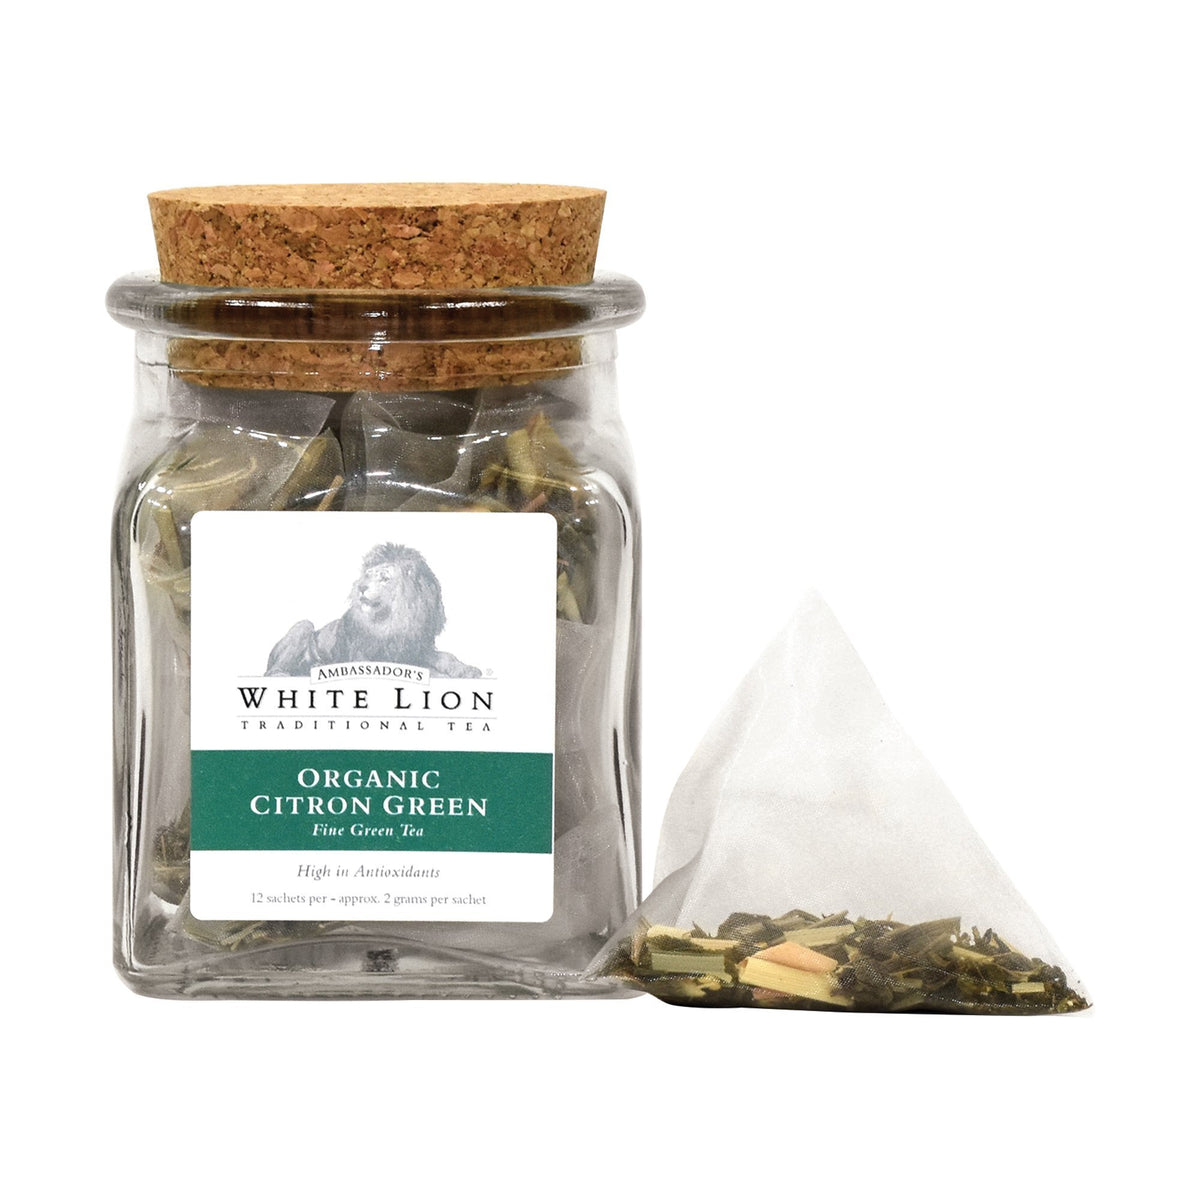 Ambassador's White Lion Organic Citron Green Tea